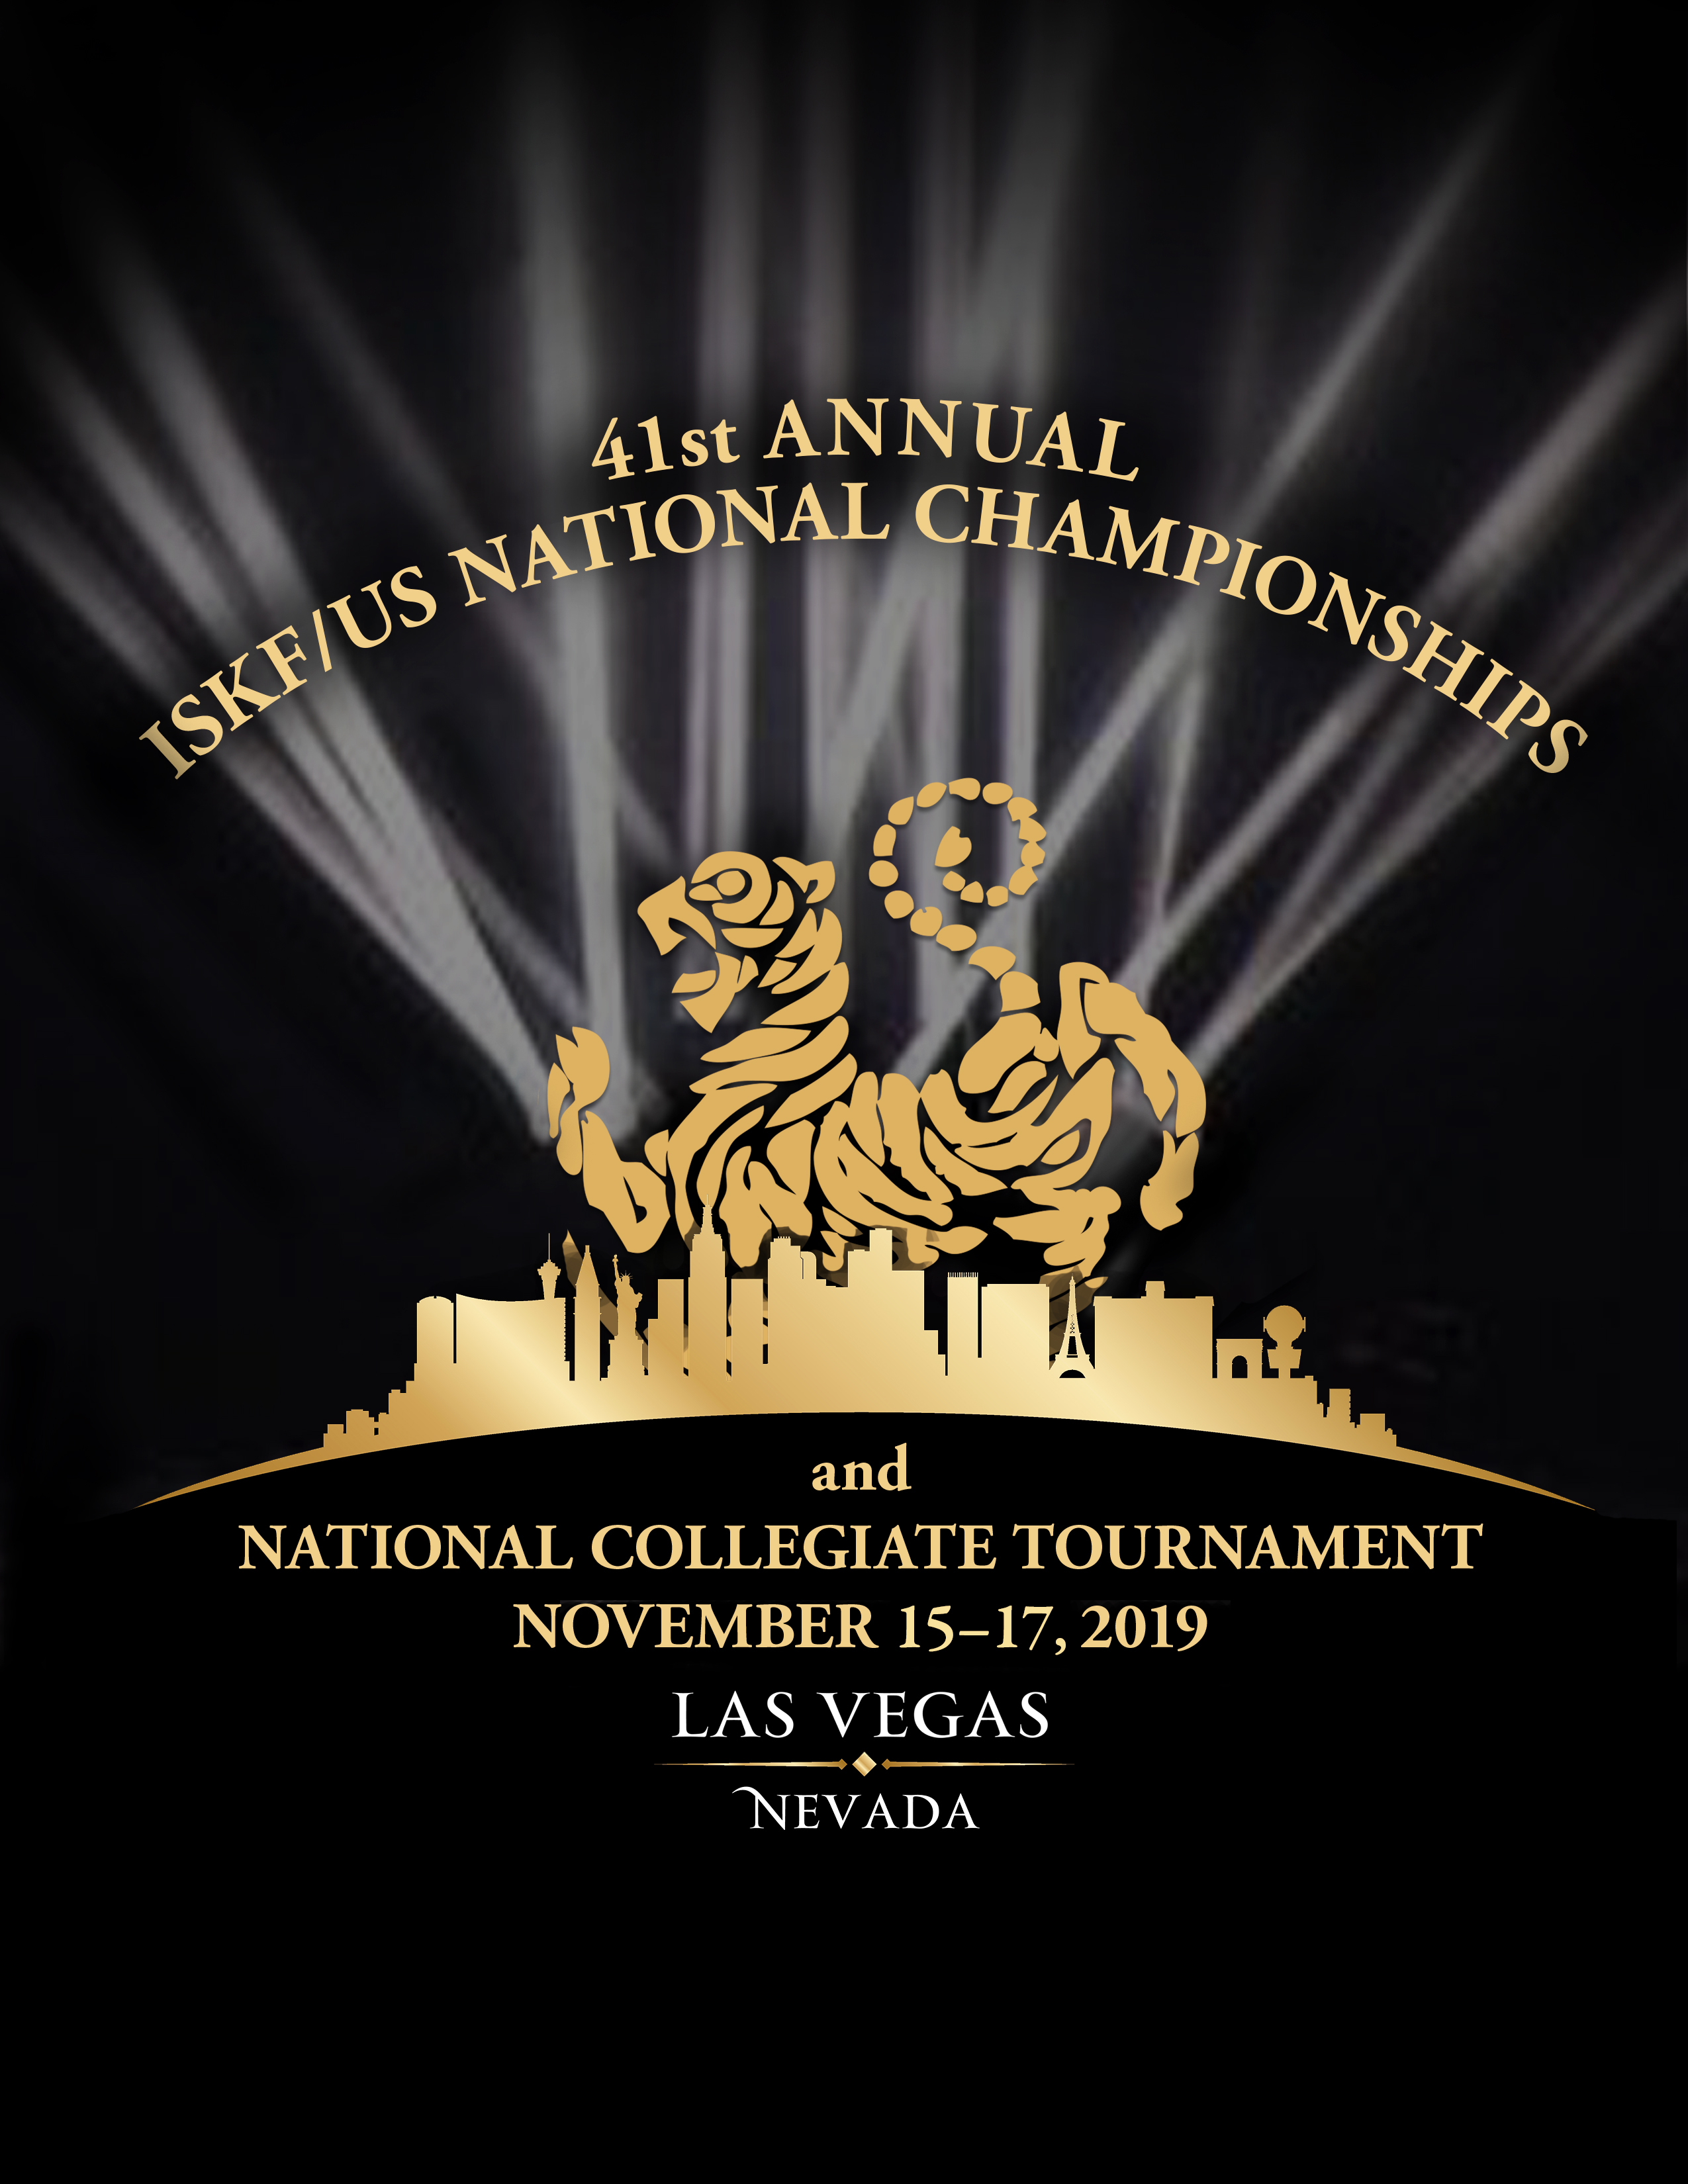 41st Annual ISKF/US National Championships @ Las Vegas, NV, November 15-17, 2019